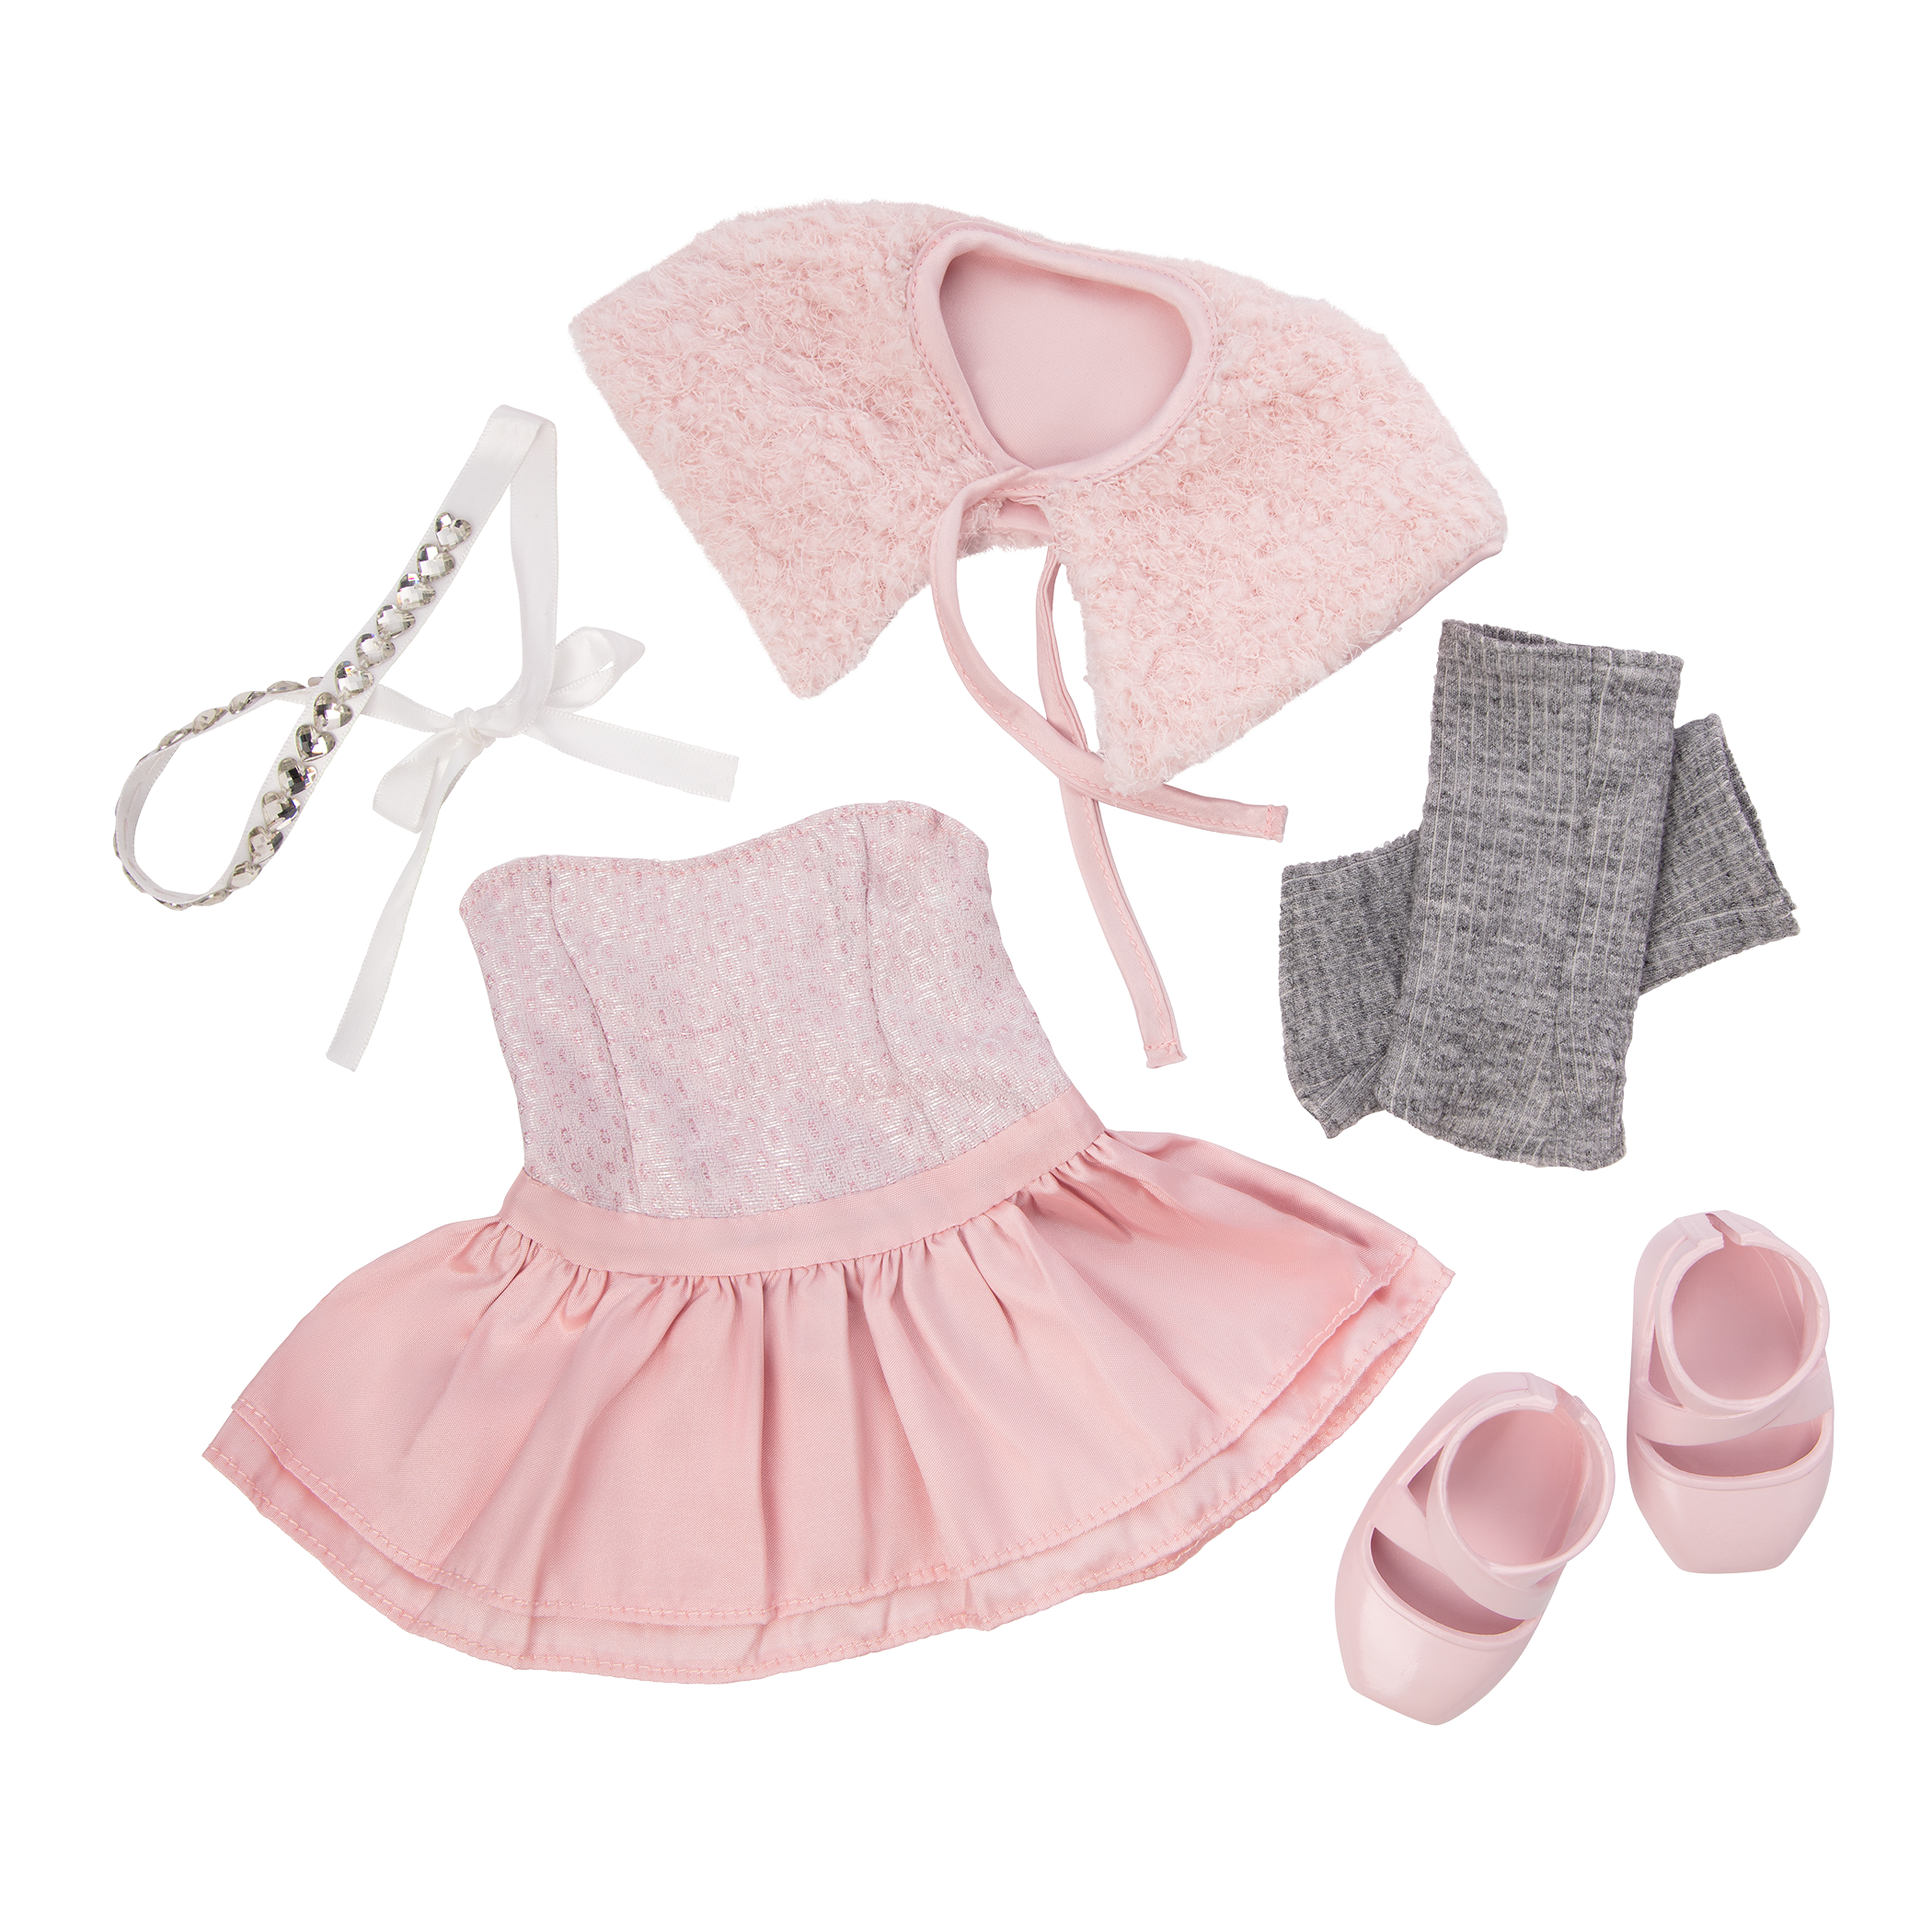 Alexa 18-inch Ballet Doll in Pink